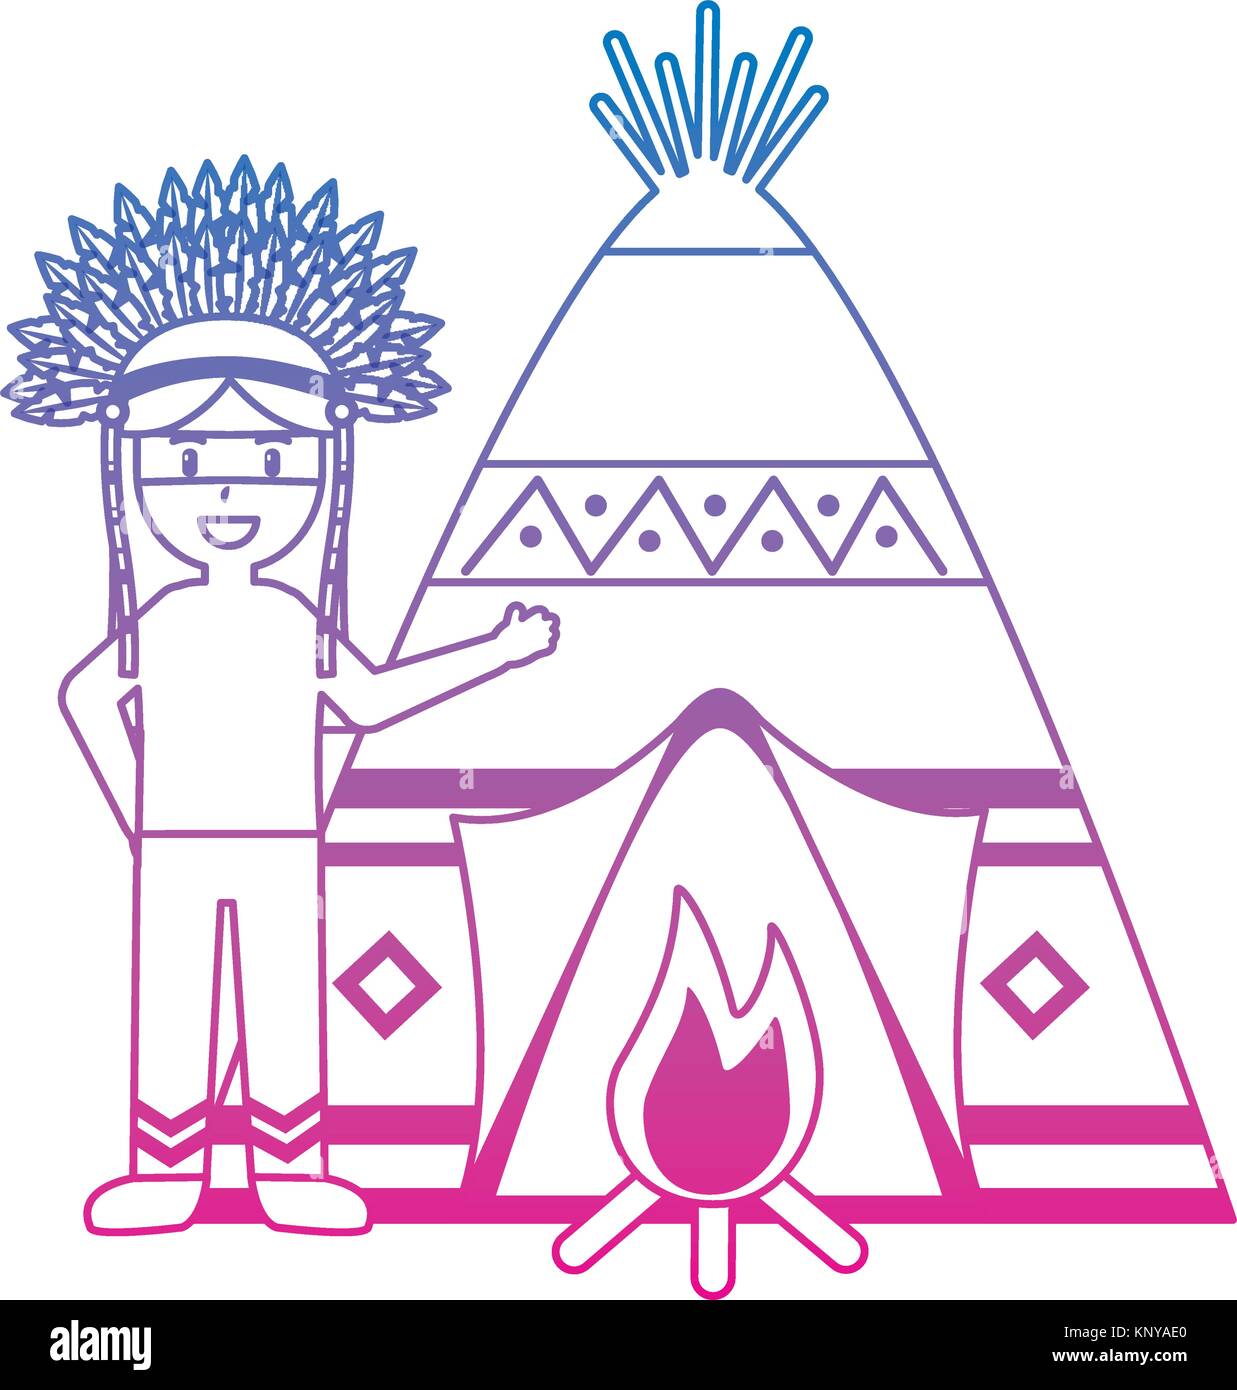 Native American Indian Mann mit Tipi und Lagerfeuer Stock Vektor